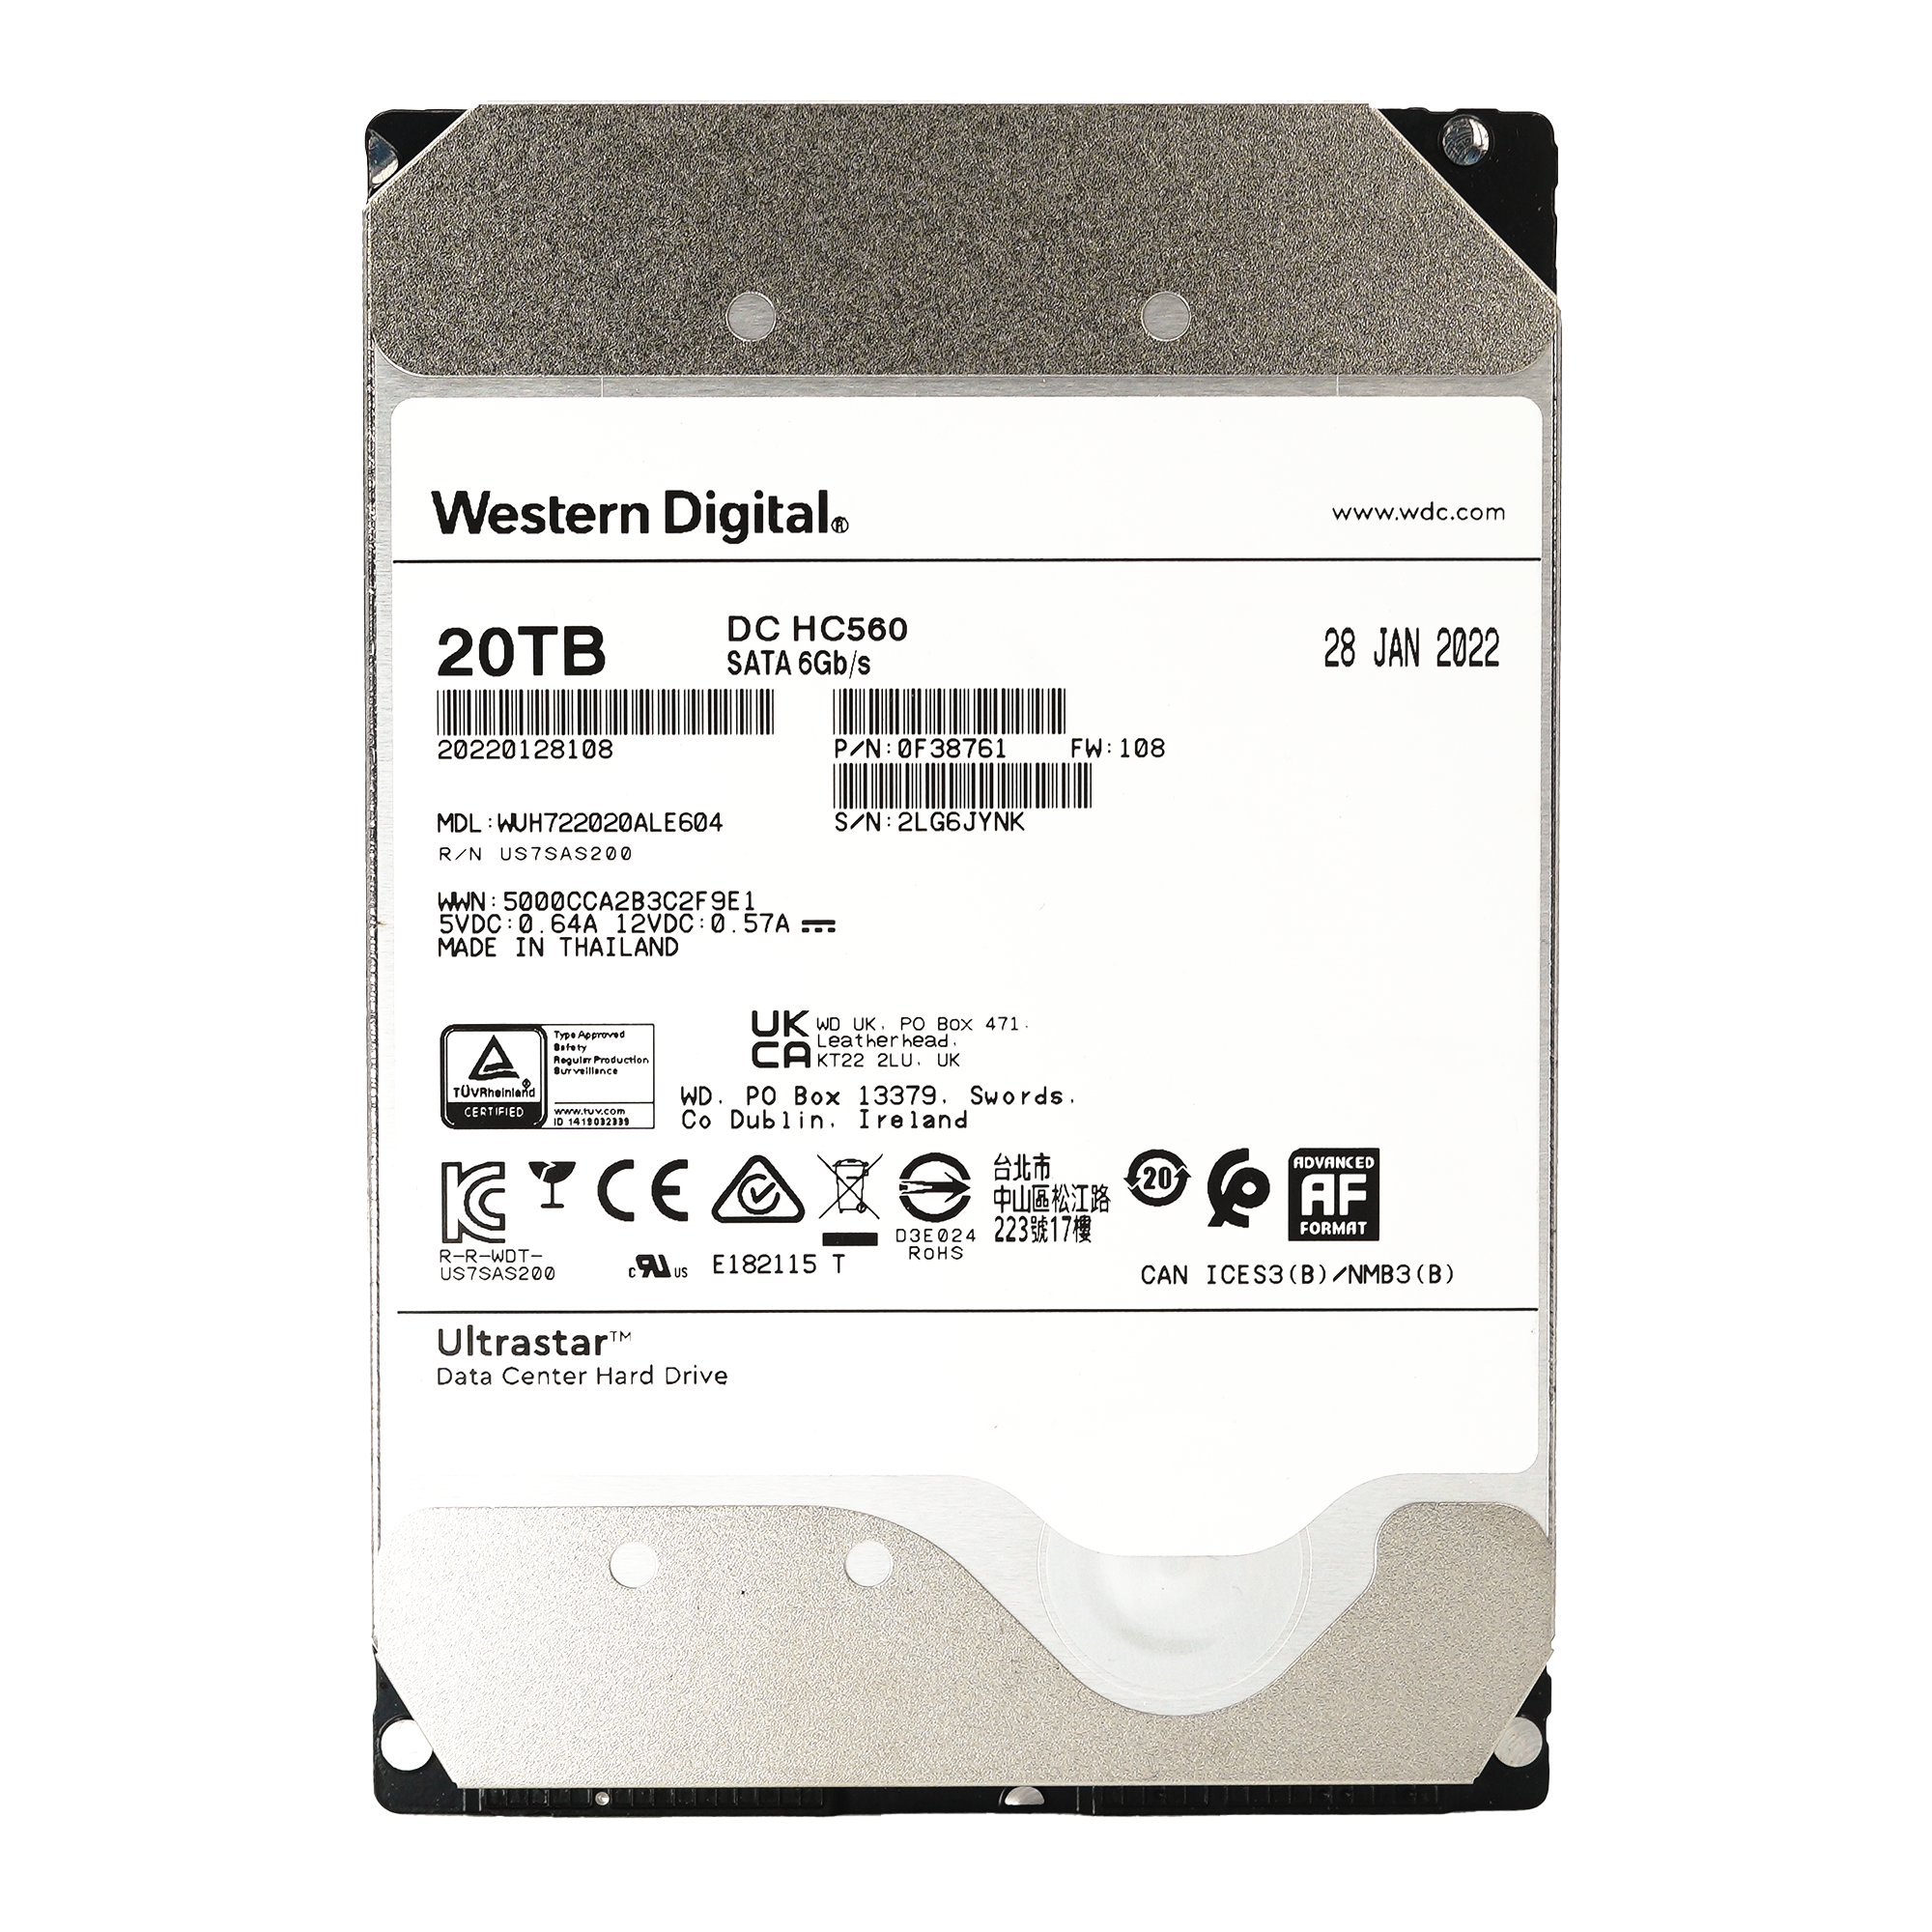 Western Digital Ultrastar HC560 WUH722020ALE604 0F38761 20TB 7.2K RPM SATA 6Gb/s 512e 3.5in Refurbished HDD - Front View